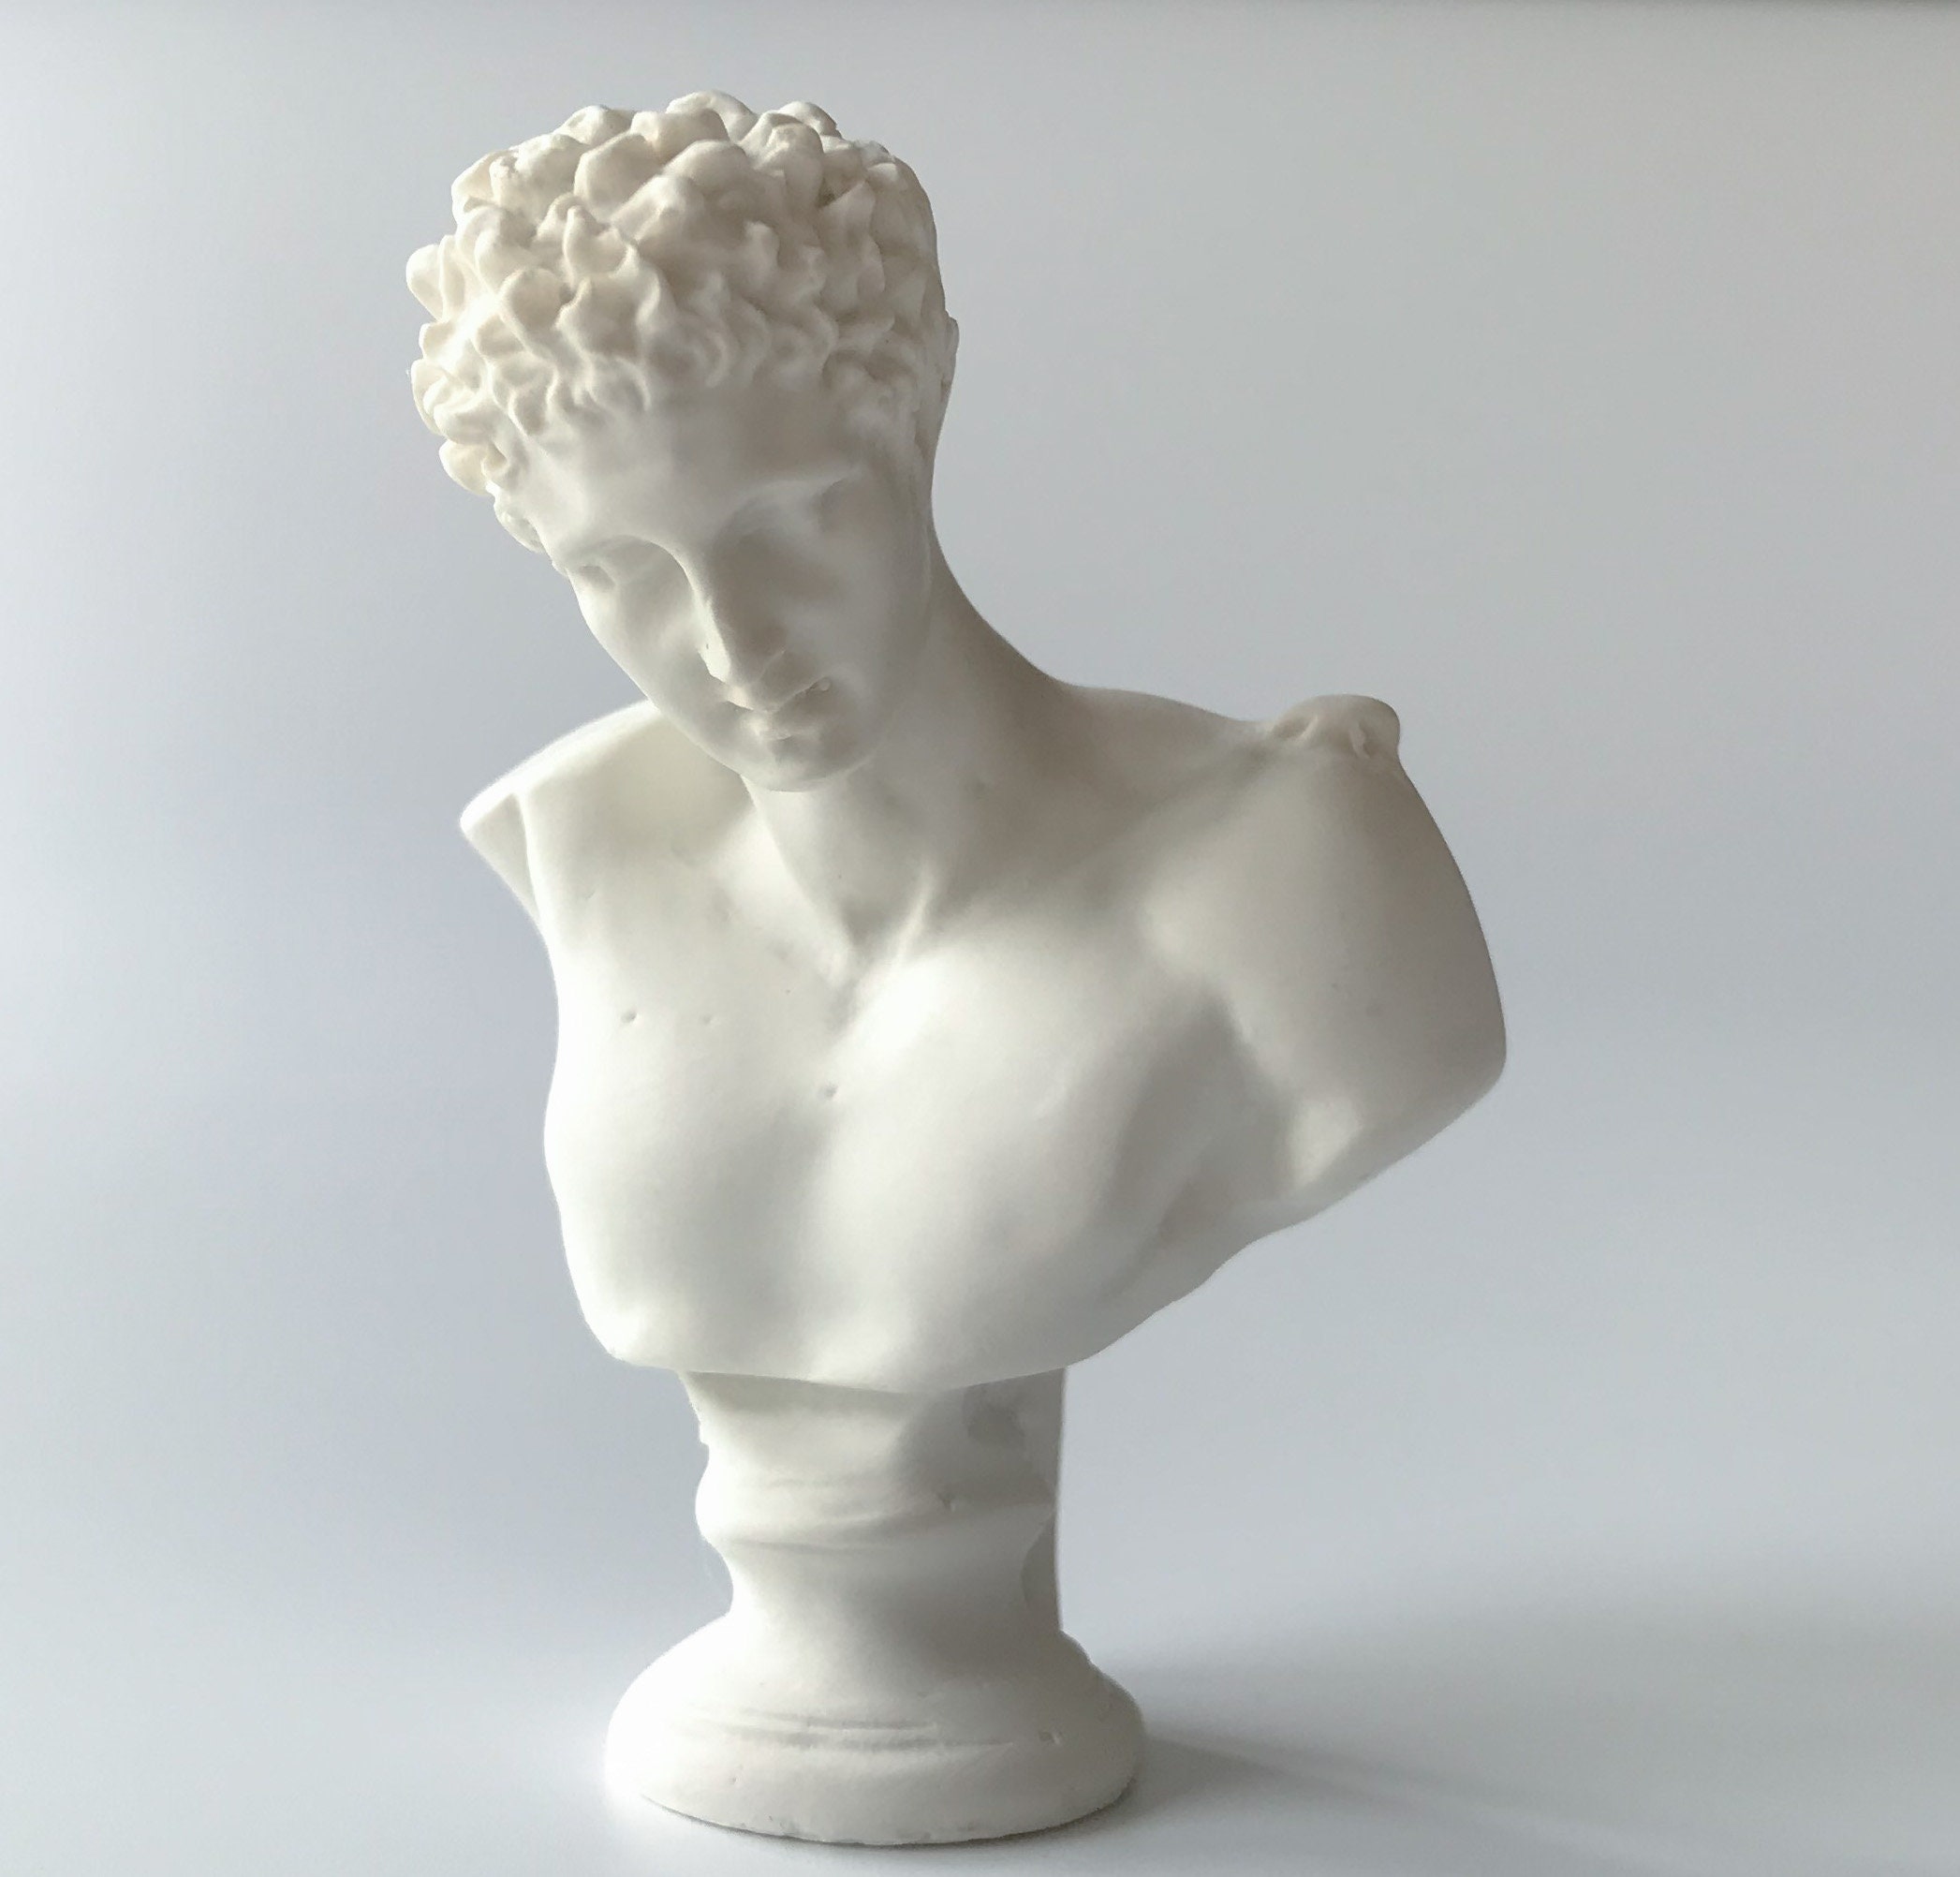 Miniature bust in 1:6 scale-Figurine-Ivory colour-Man-Ancient-Greek-Roman-Torso-Dollhouse miniatures-Sculptural-Art-Myth-Figures-Mini statue